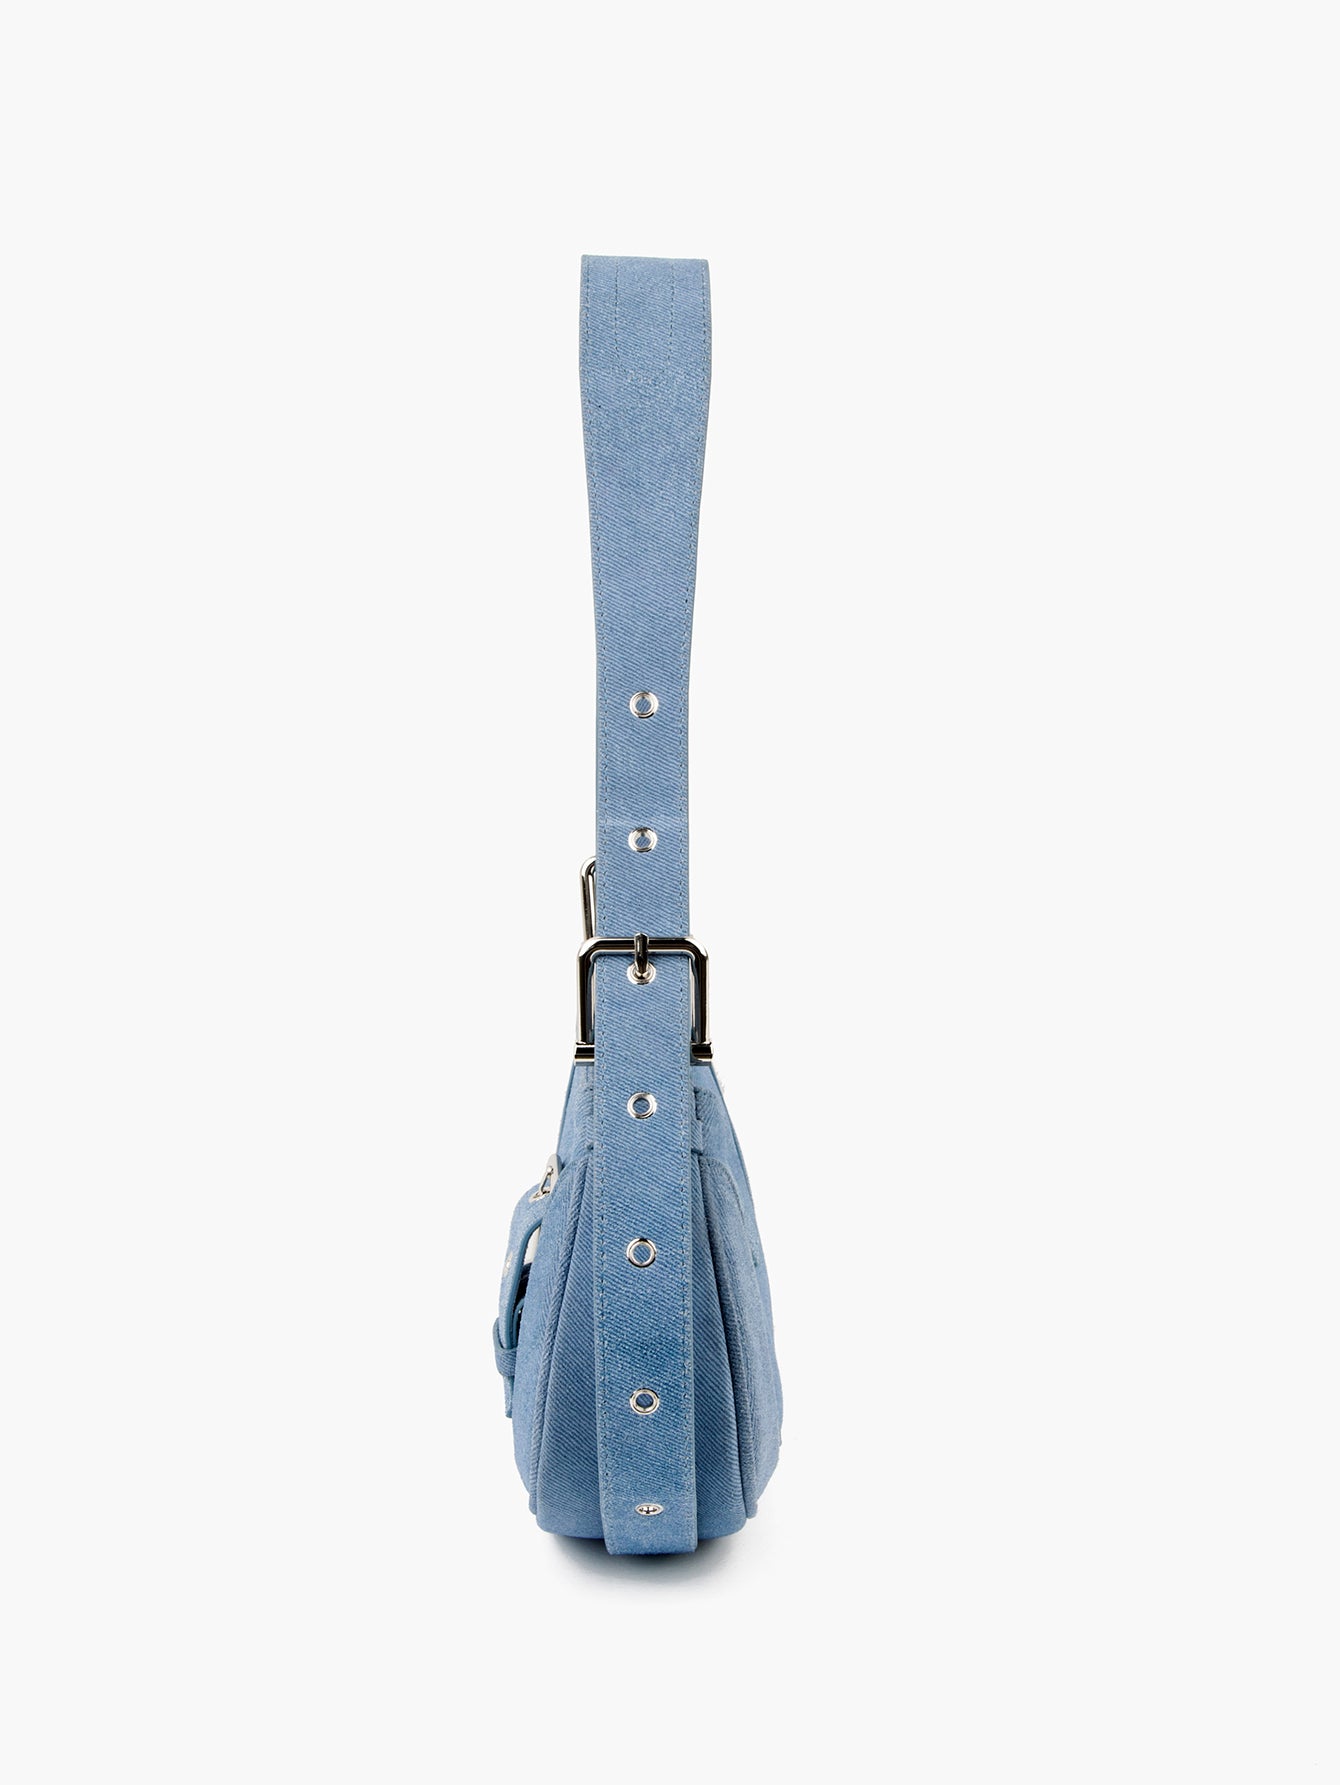 Denim Pattern Cowhide Leather Crescent Hobo Bag